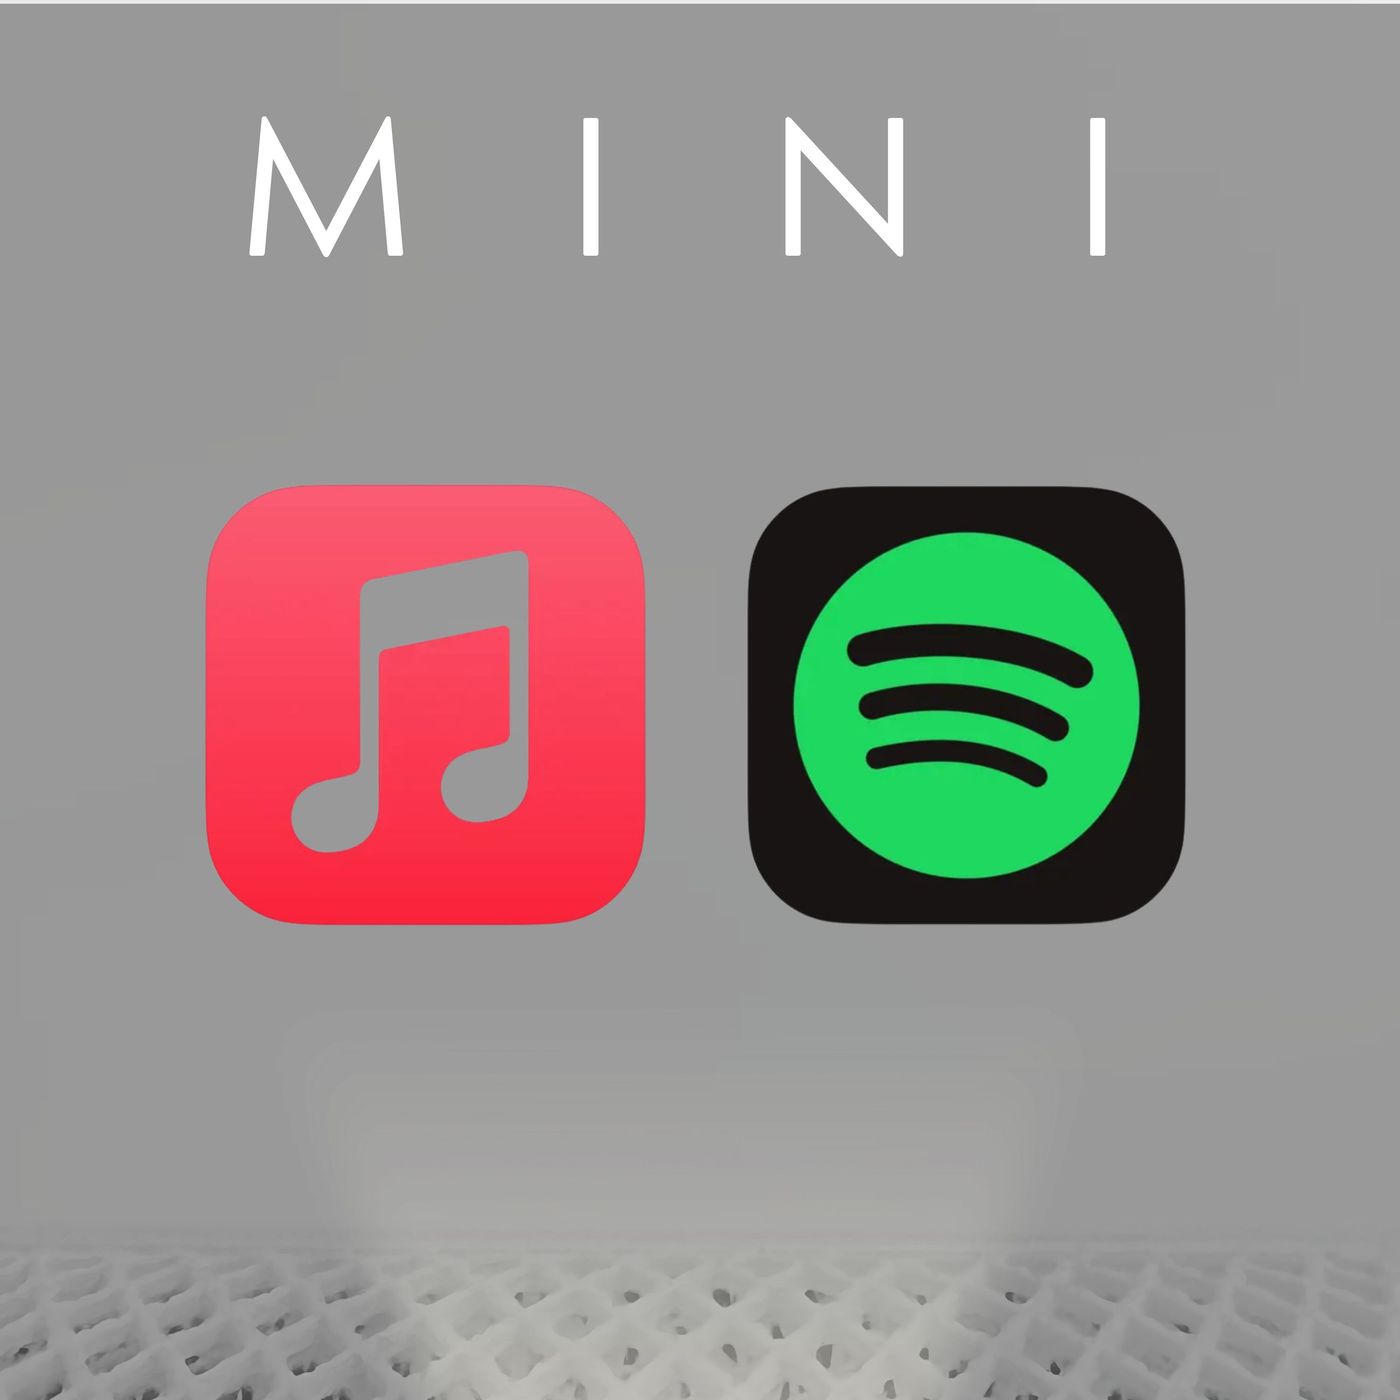 EP. 8 - Apple Music vs Spotify